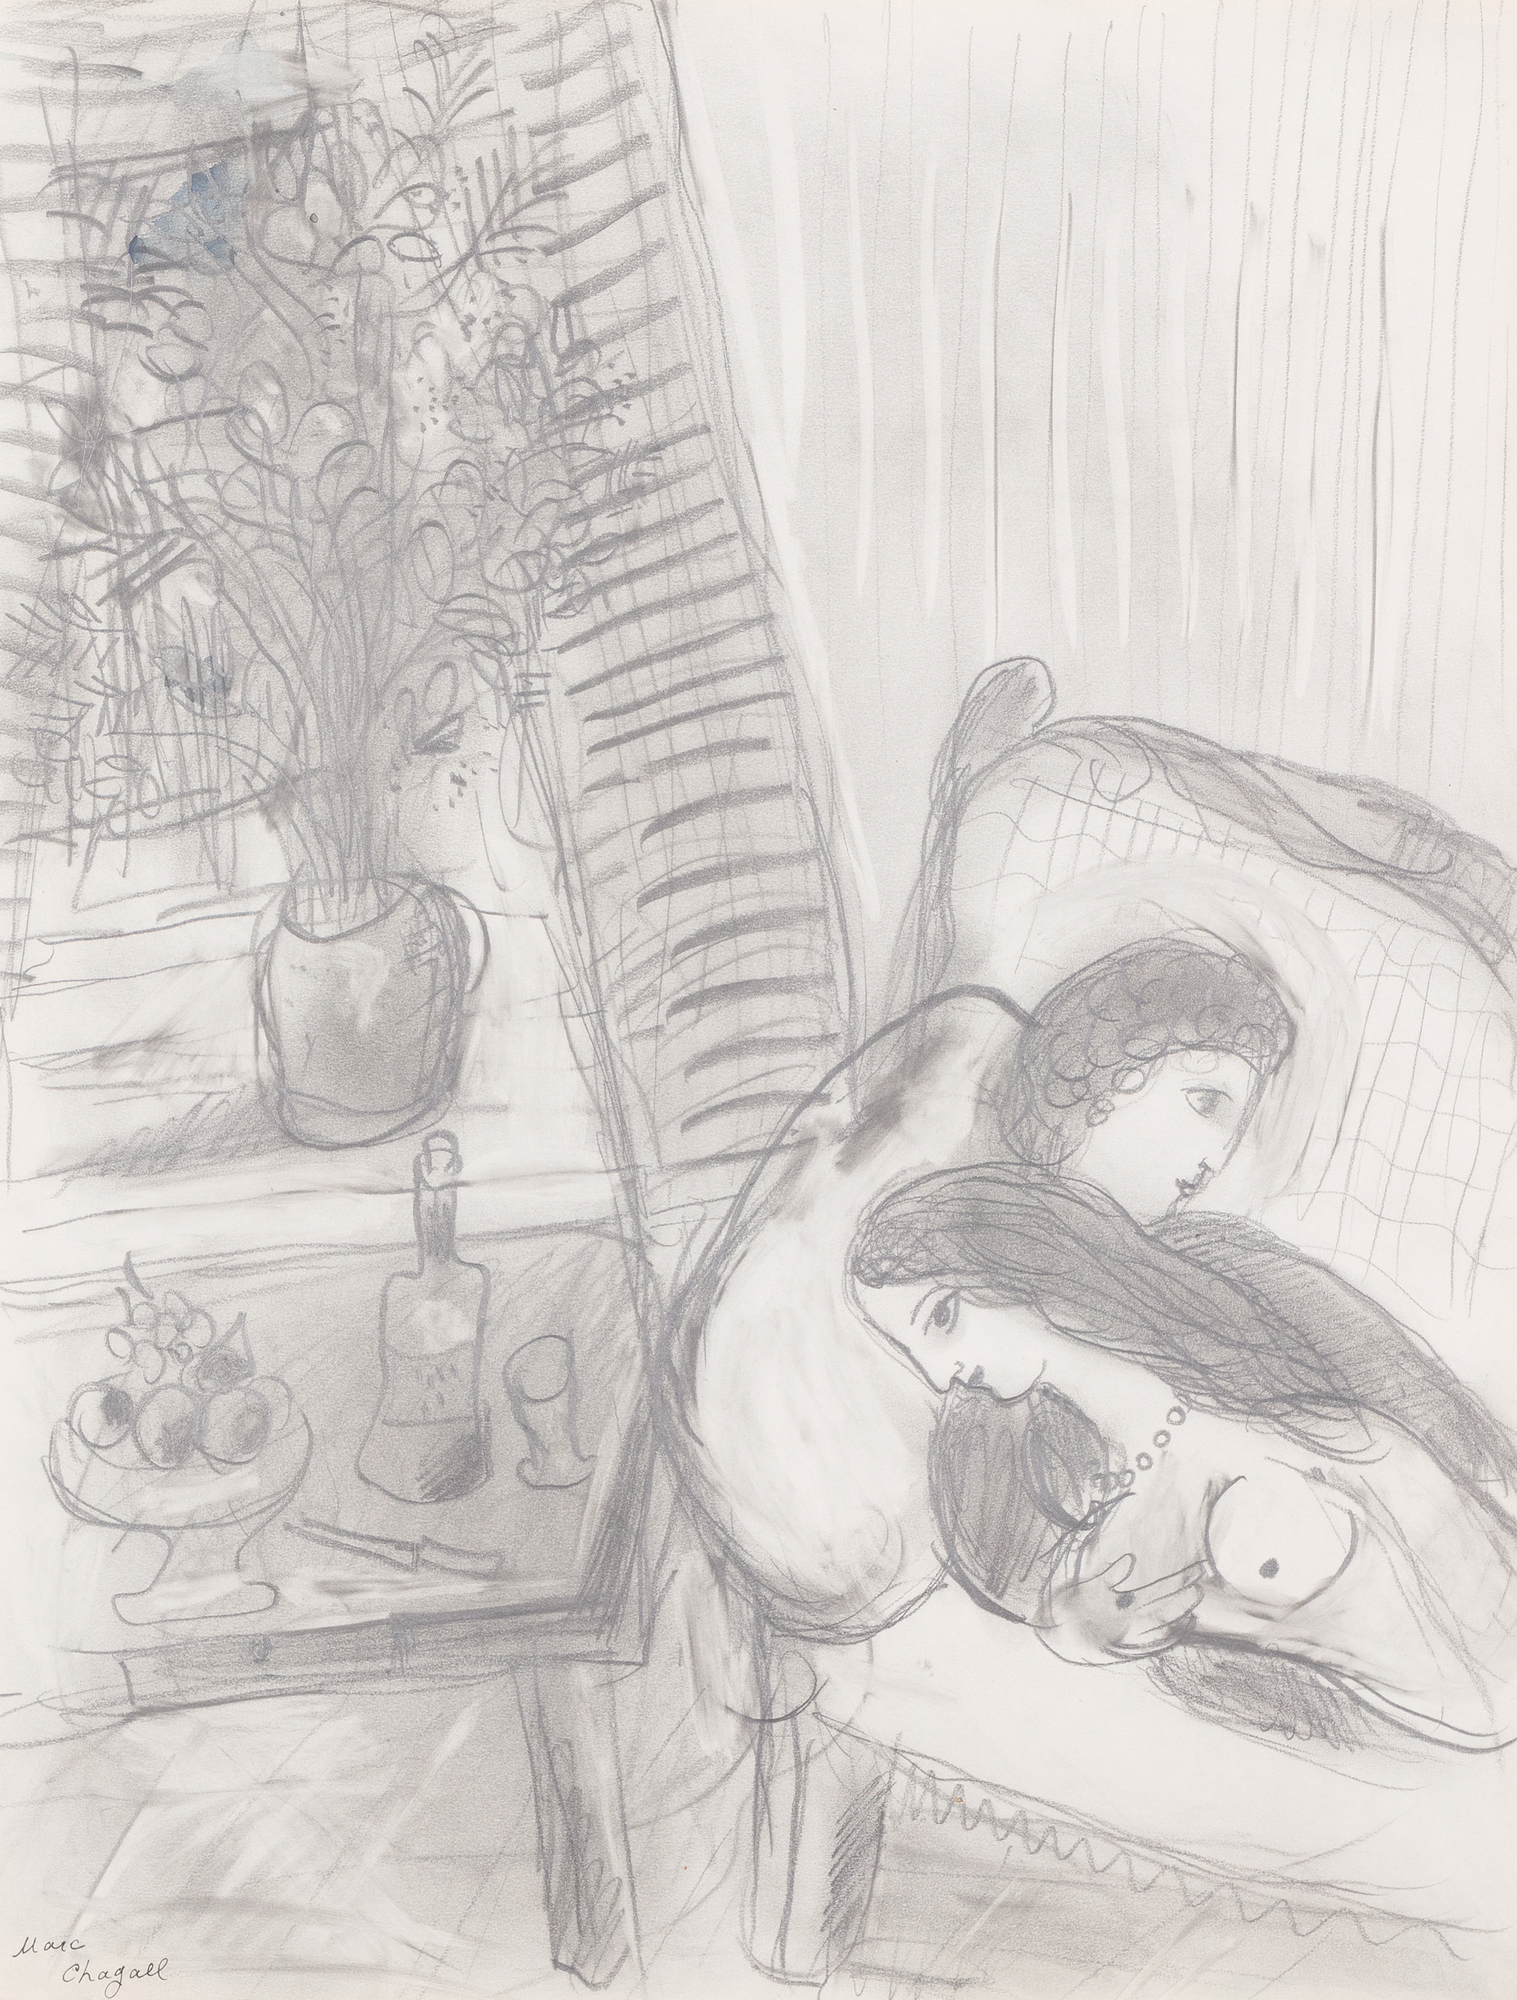 MARC CHAGALL - Les Amoureux sur le divan - watercolor and pencil on paper - 25 1/2 x 19 1/2 in.